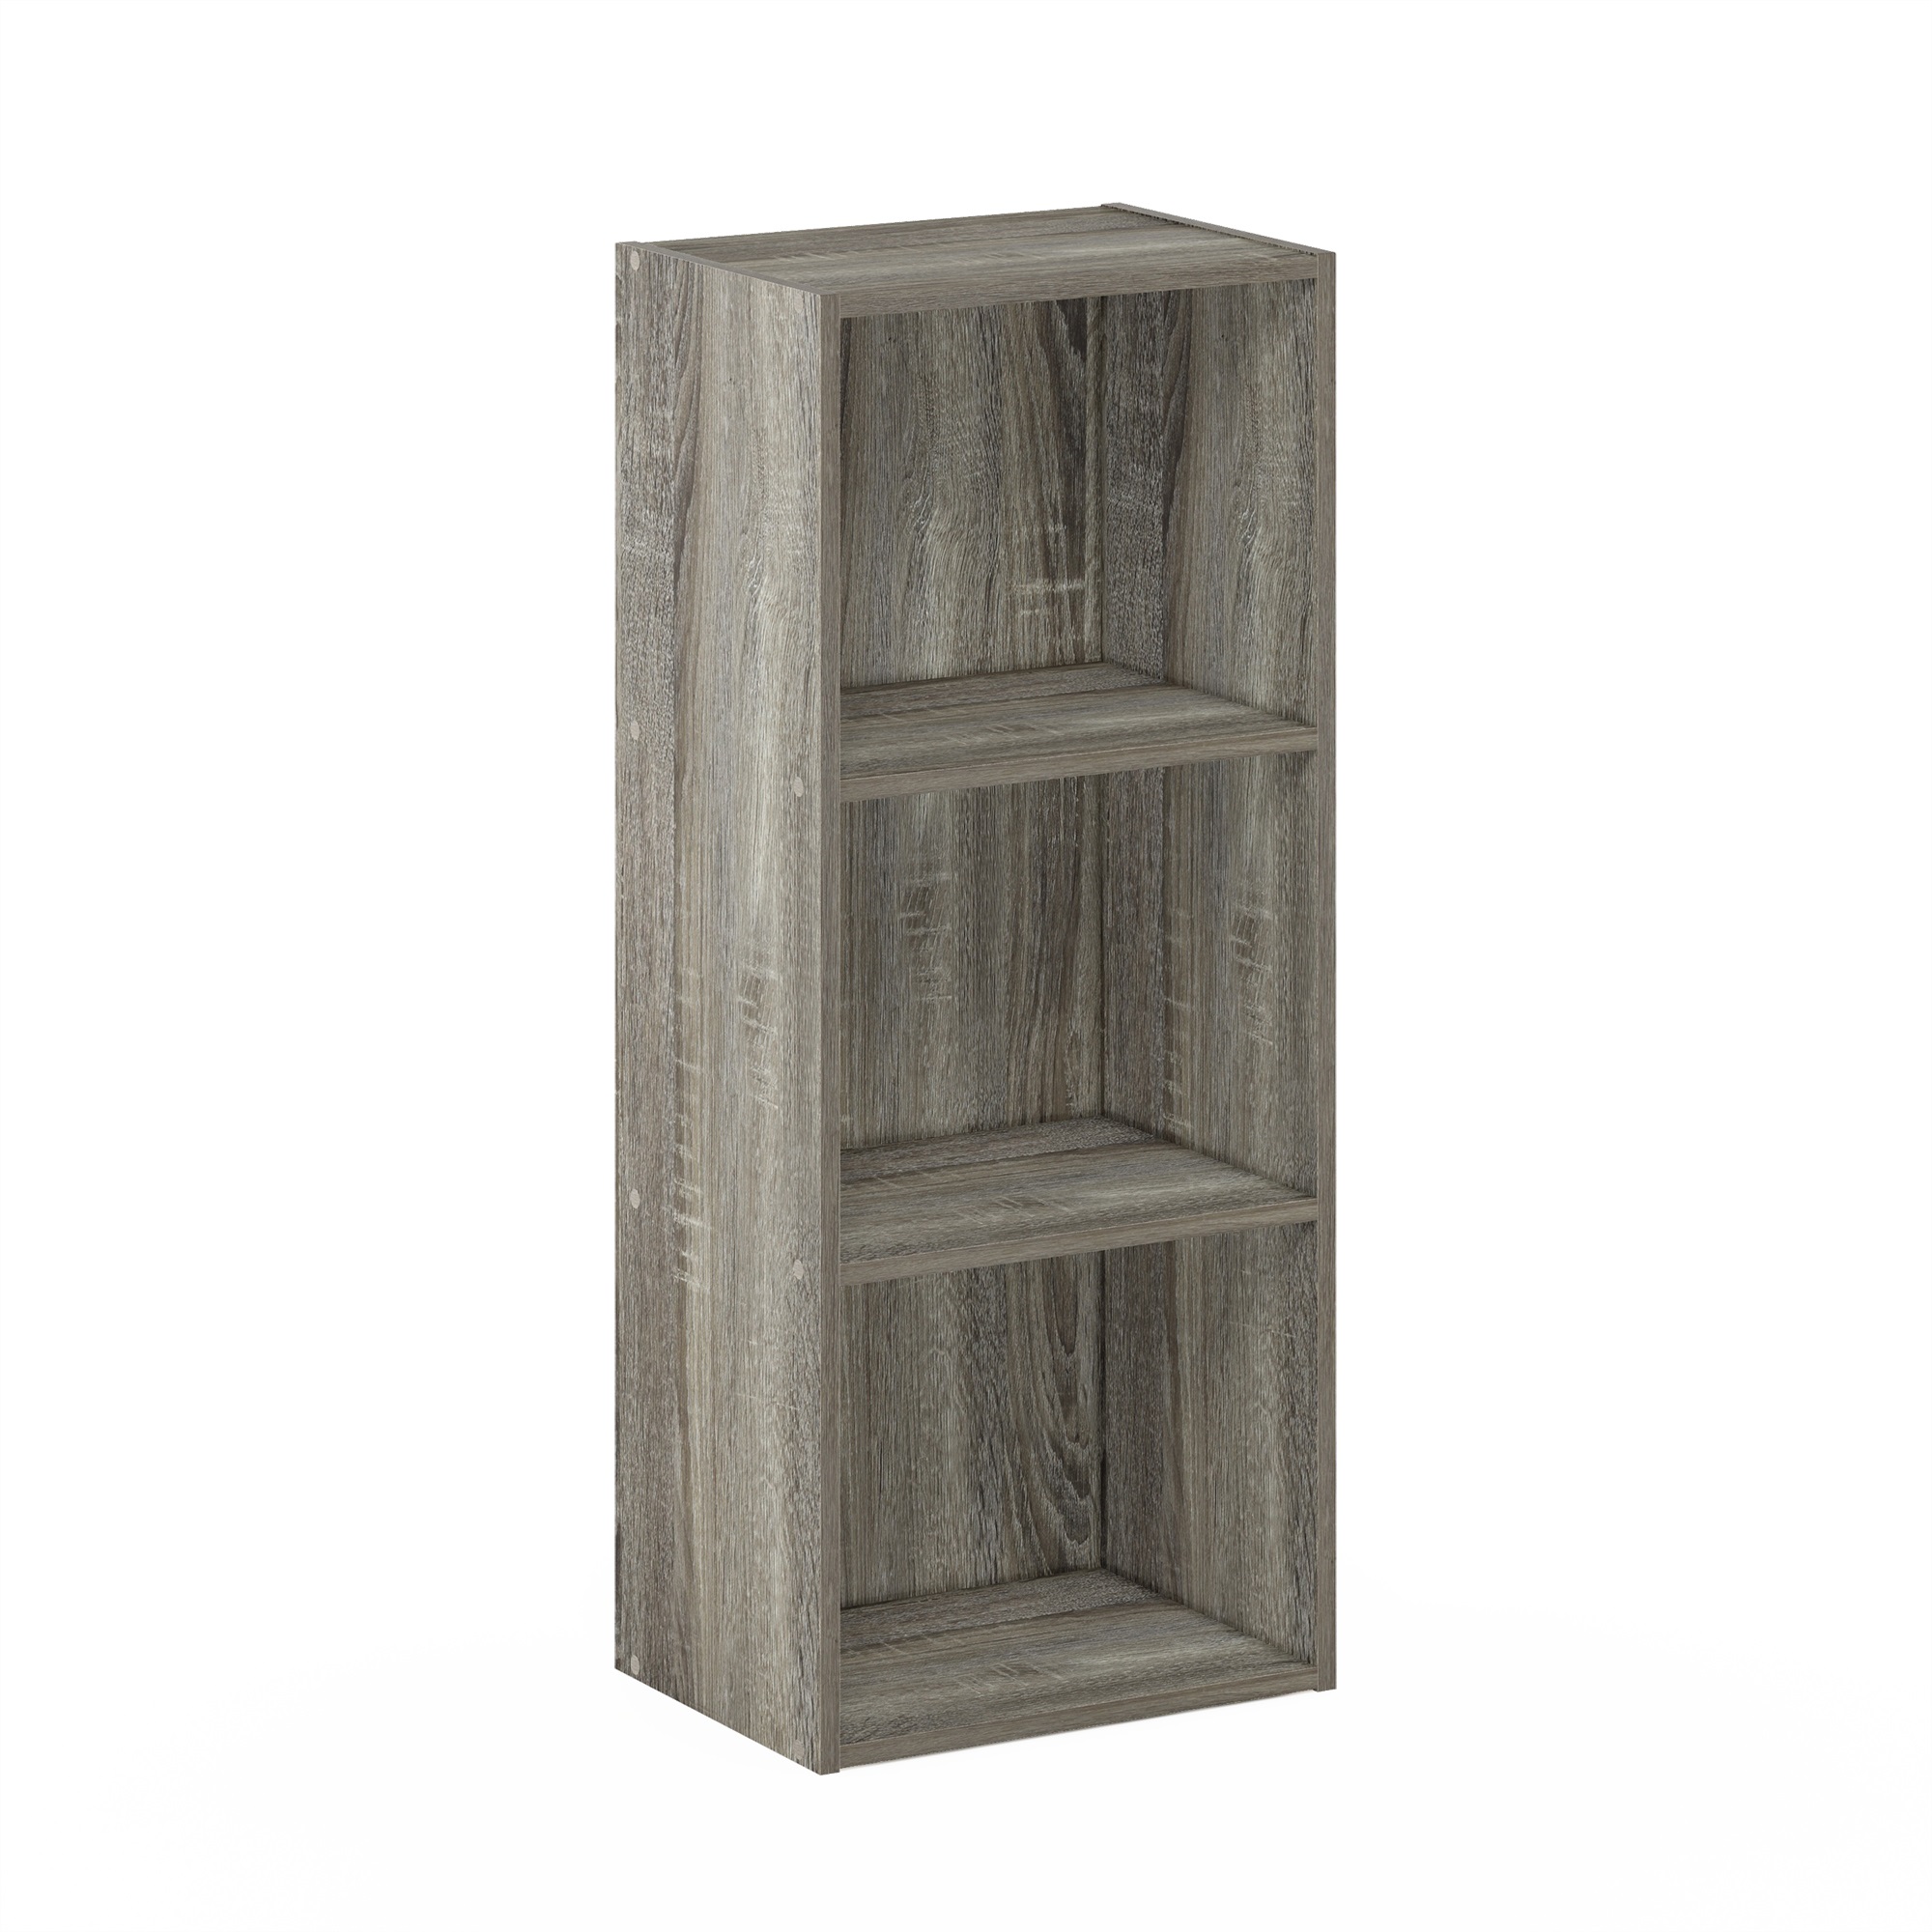 Furinno Luder 3-Tier Open Shelf Bookcase, French Oak - image 1 of 5